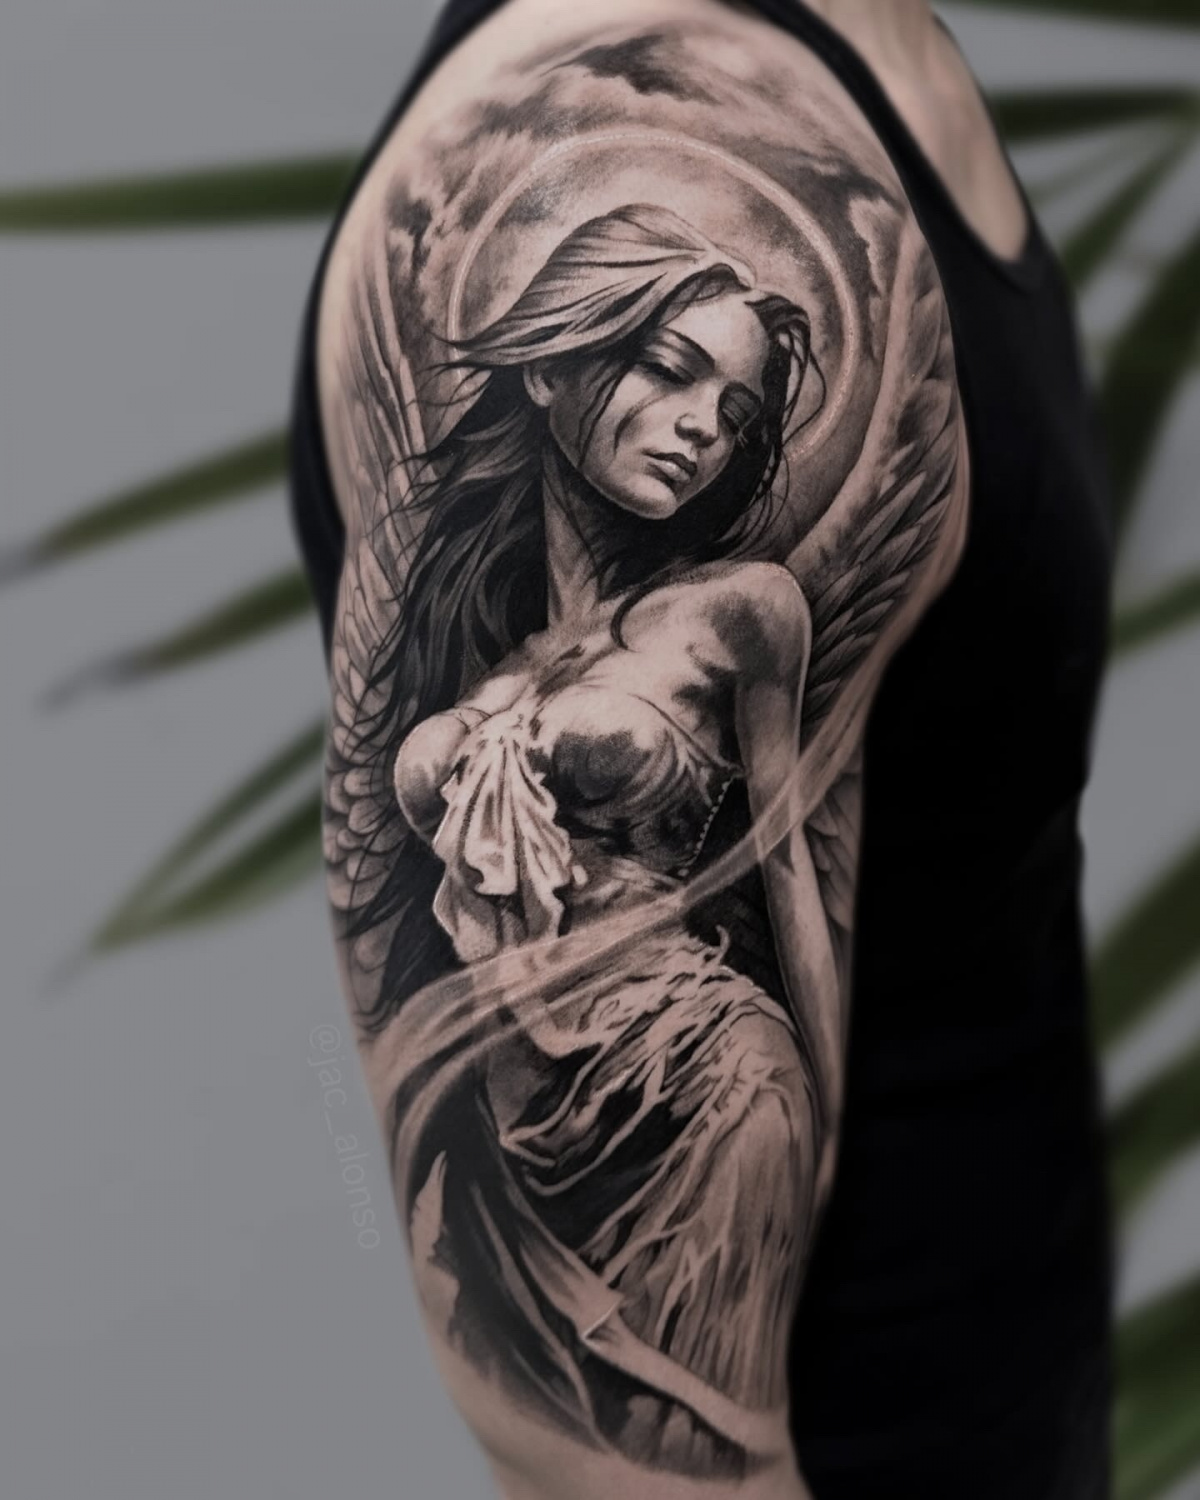 Tattoo artist Jesus Alonso